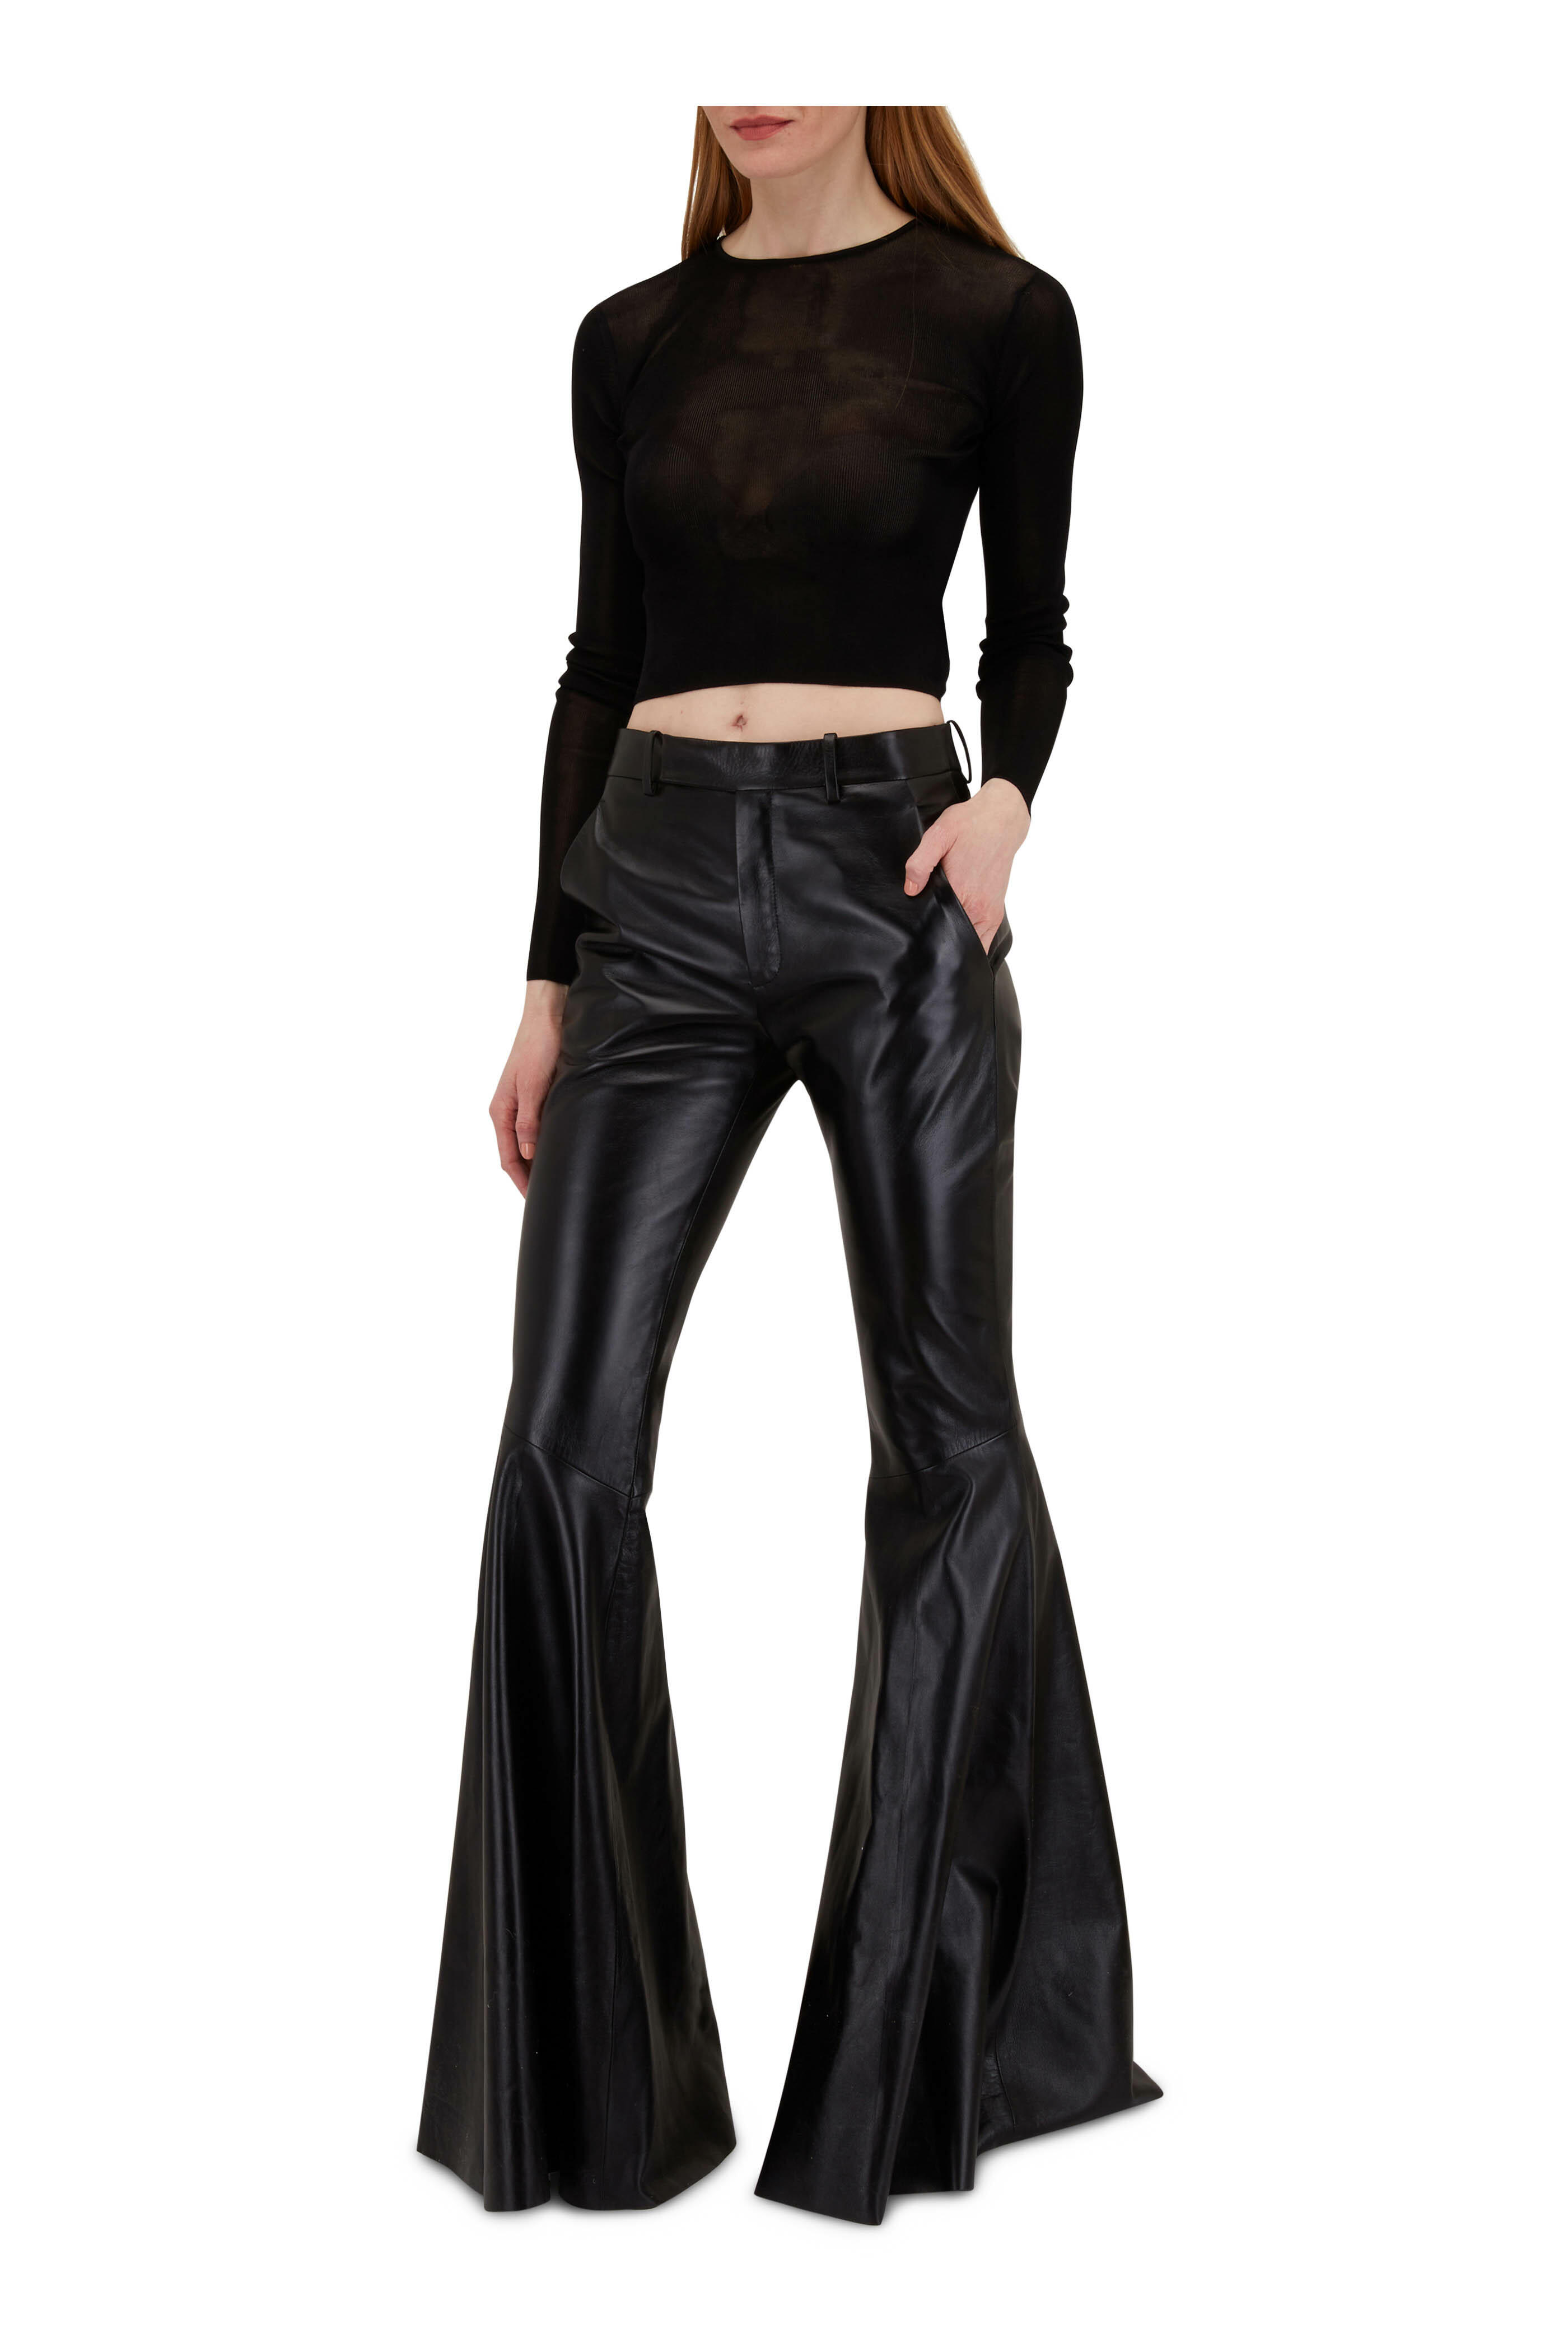 Saint Laurent - Black Leather Bellbottom Pant